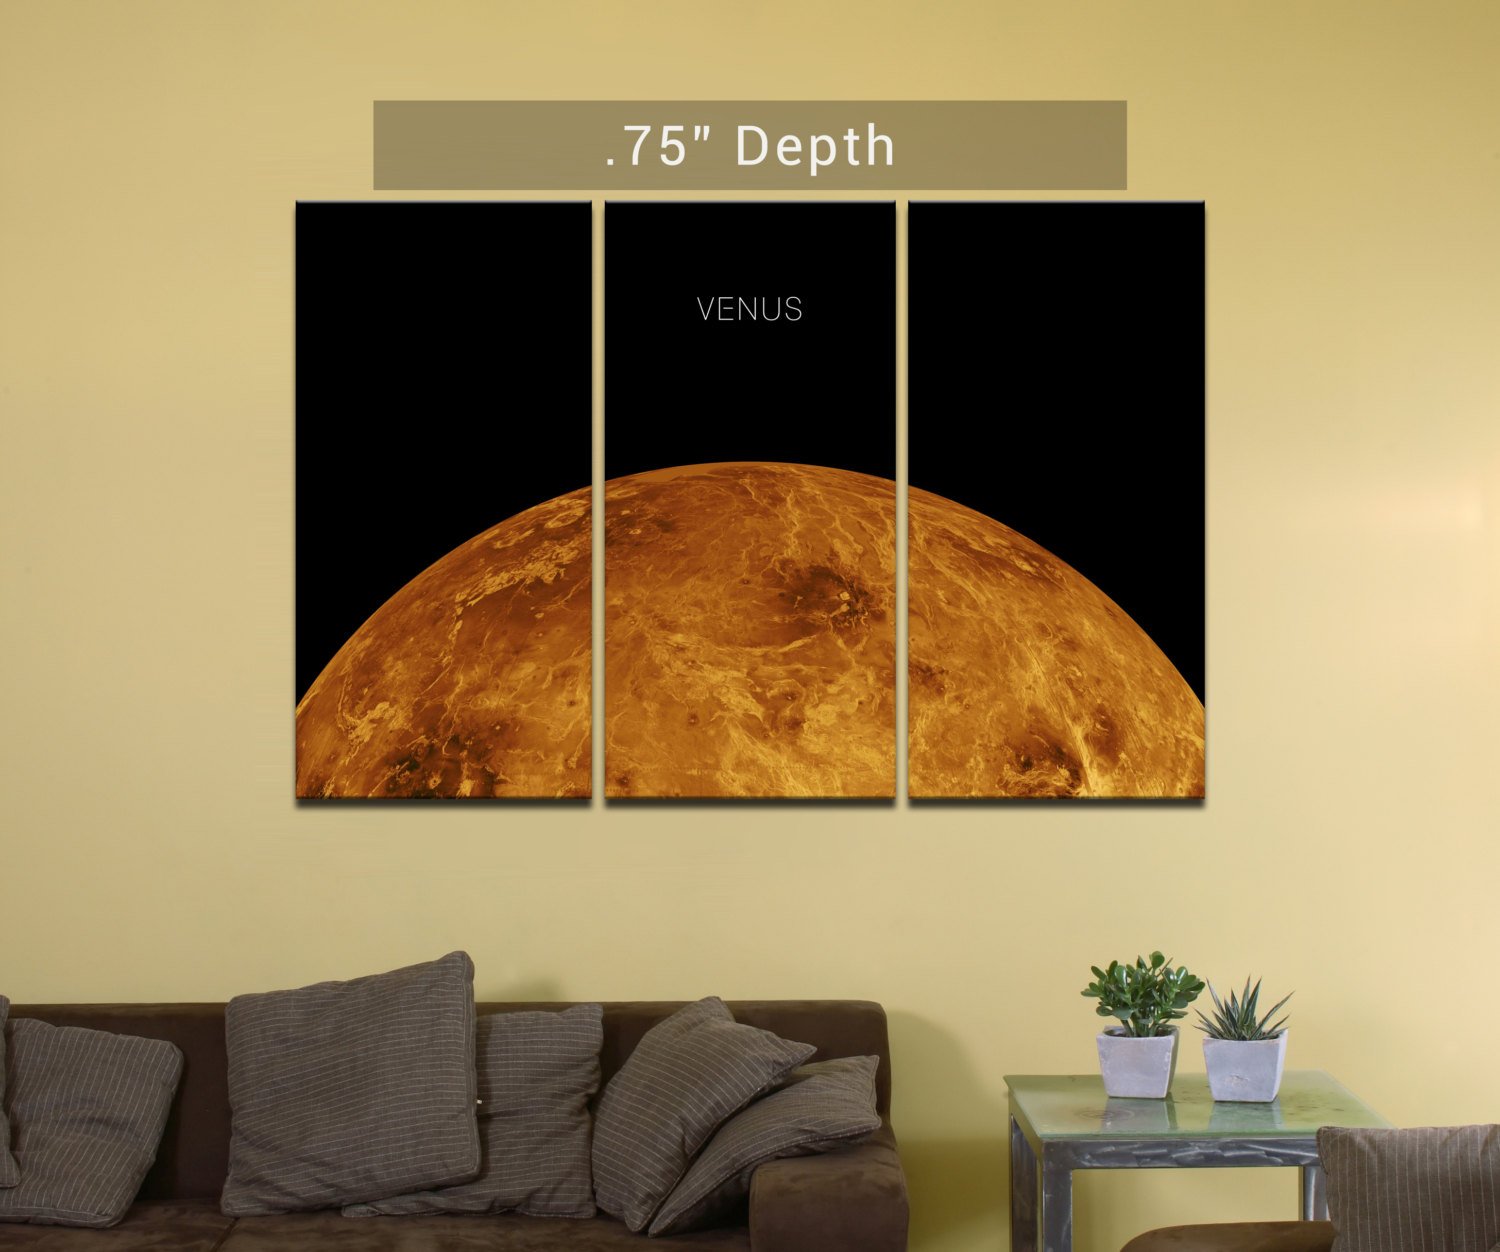 Planet Venus - 3 Canvas Split (.75" Depth)